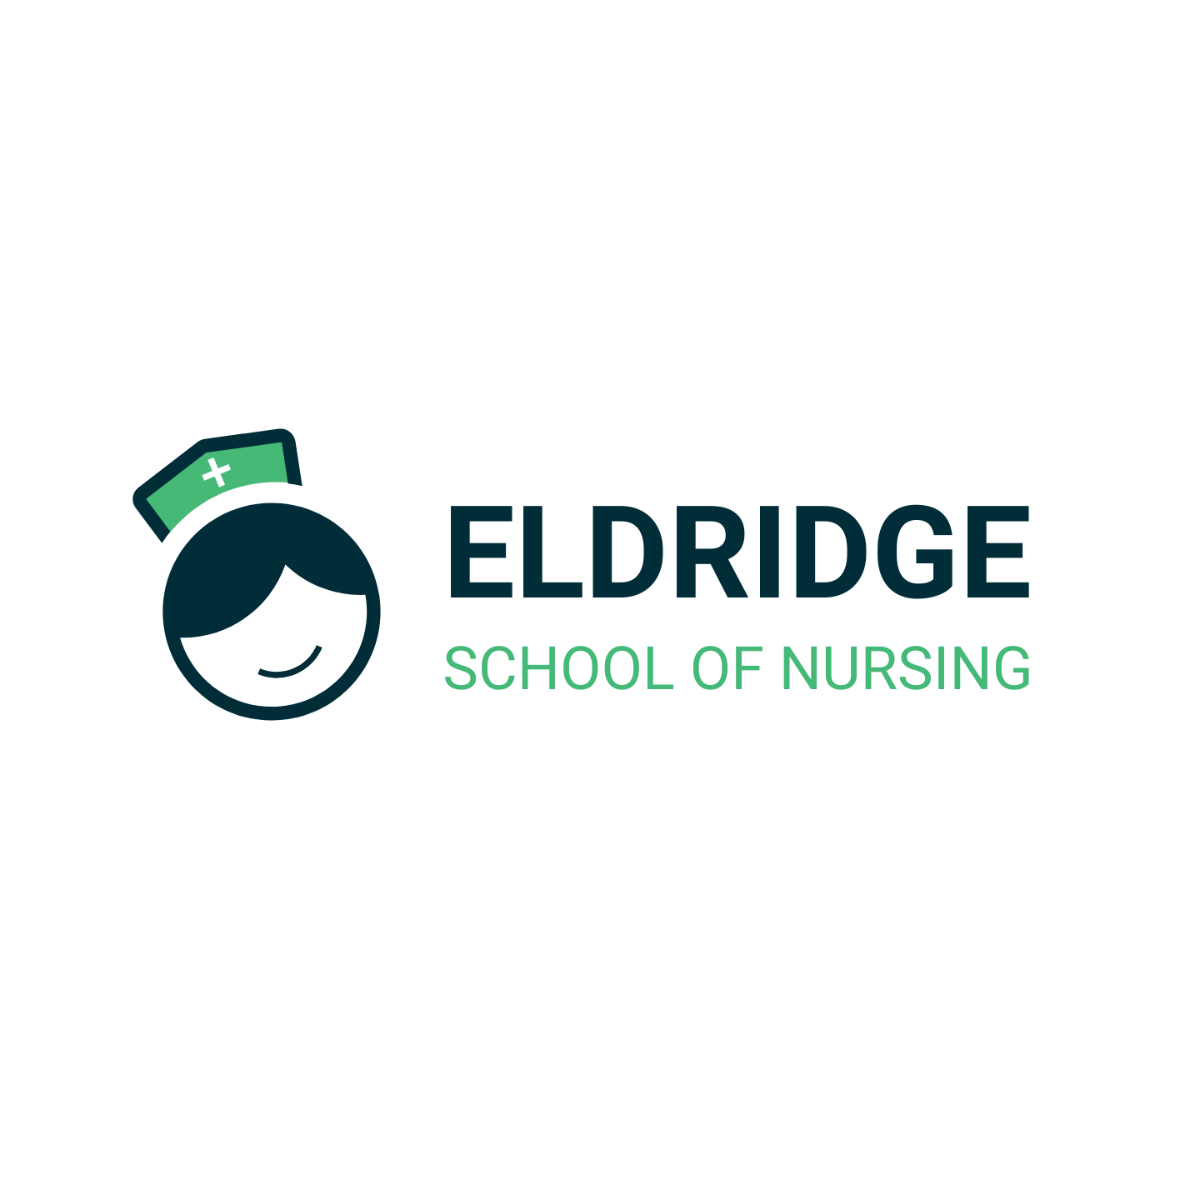 Eldridge School of Nursing Logo Template